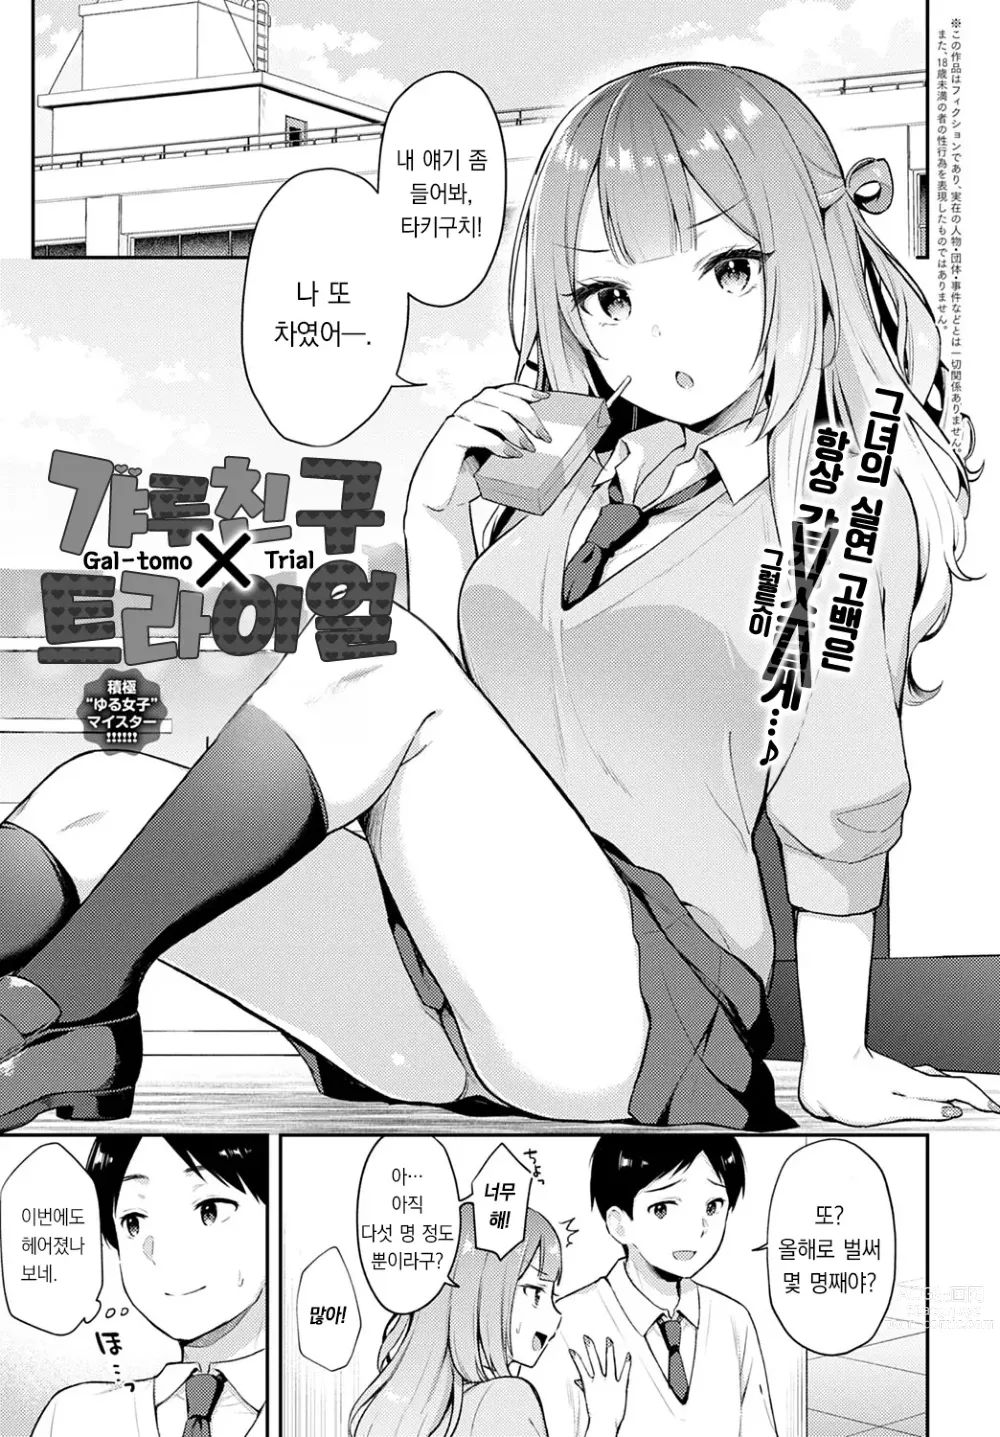 Page 2 of manga 갸루 친구×트라이얼